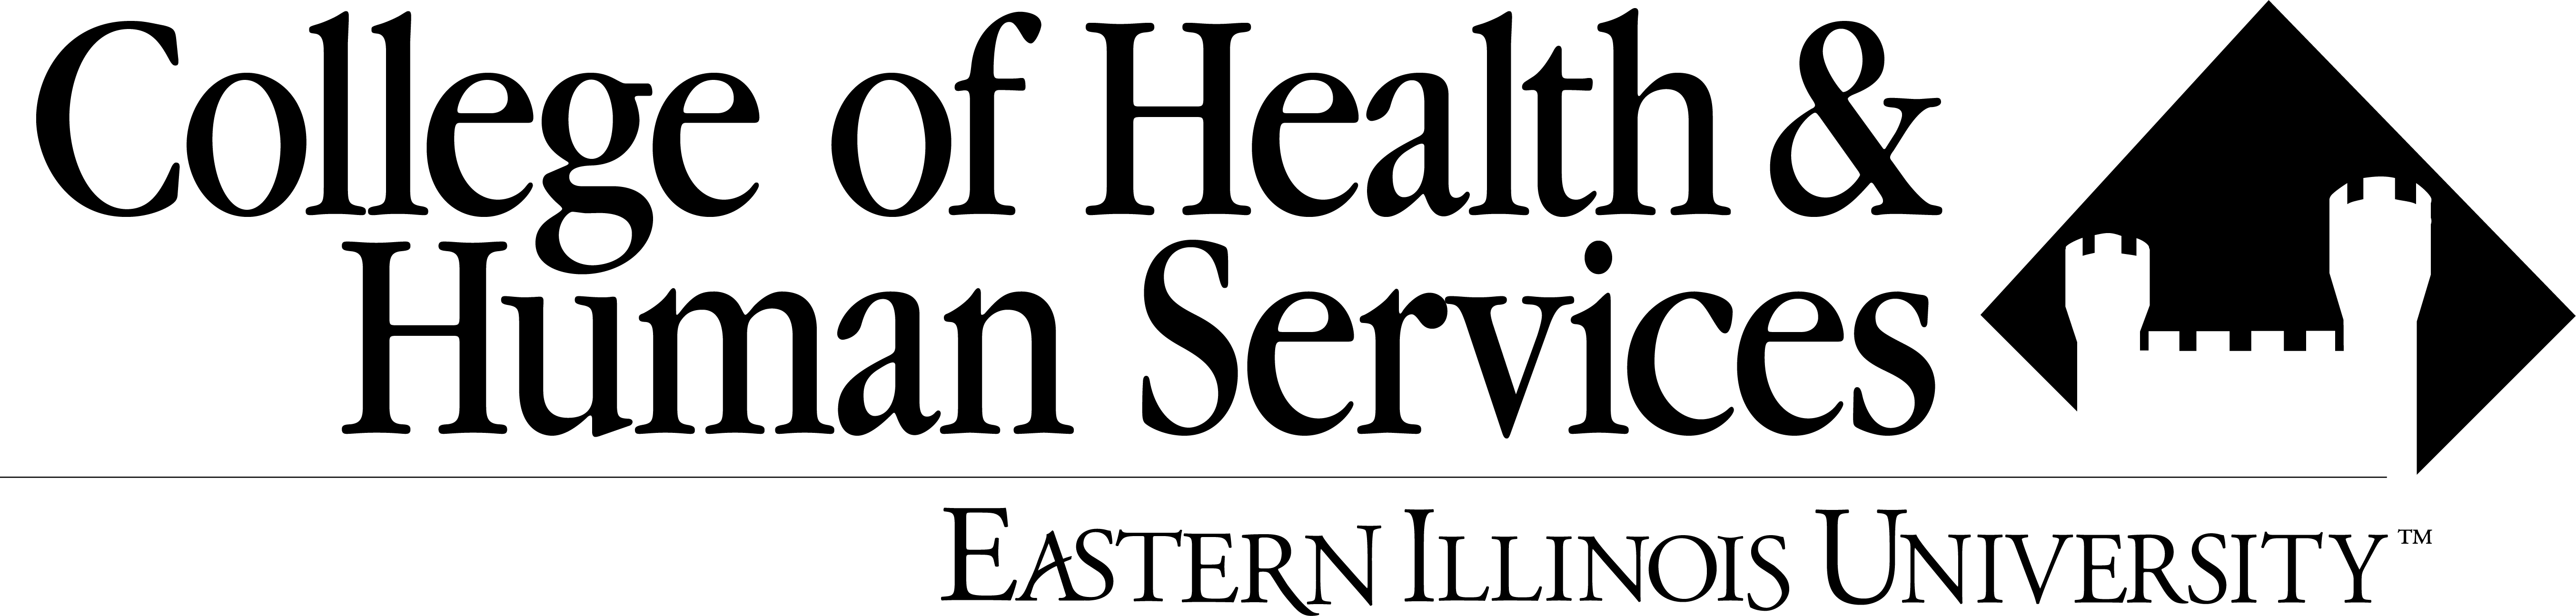 CHHS logo